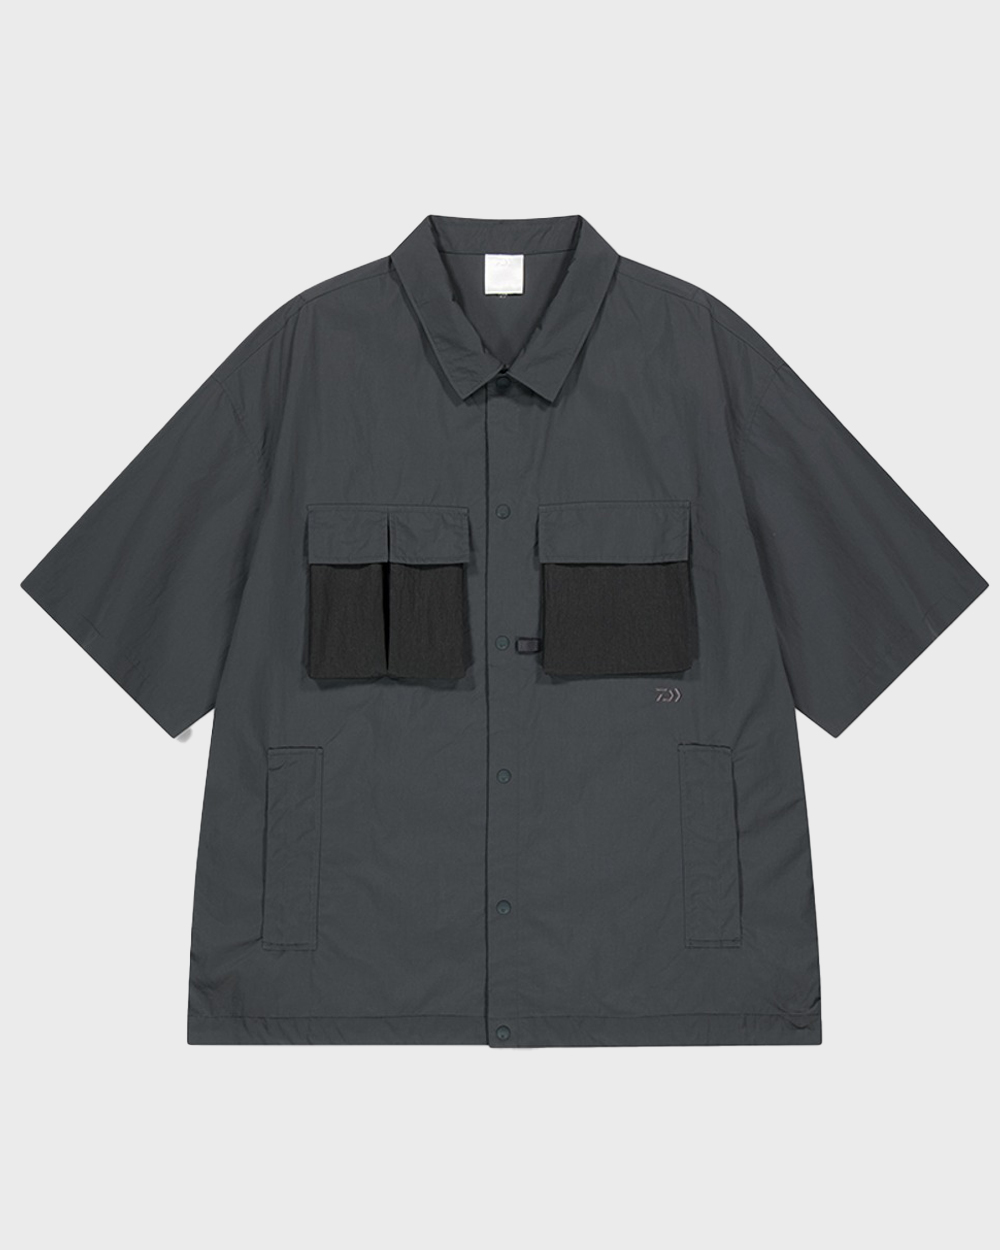 Woven Rip S/S Shirt (Charcoal)